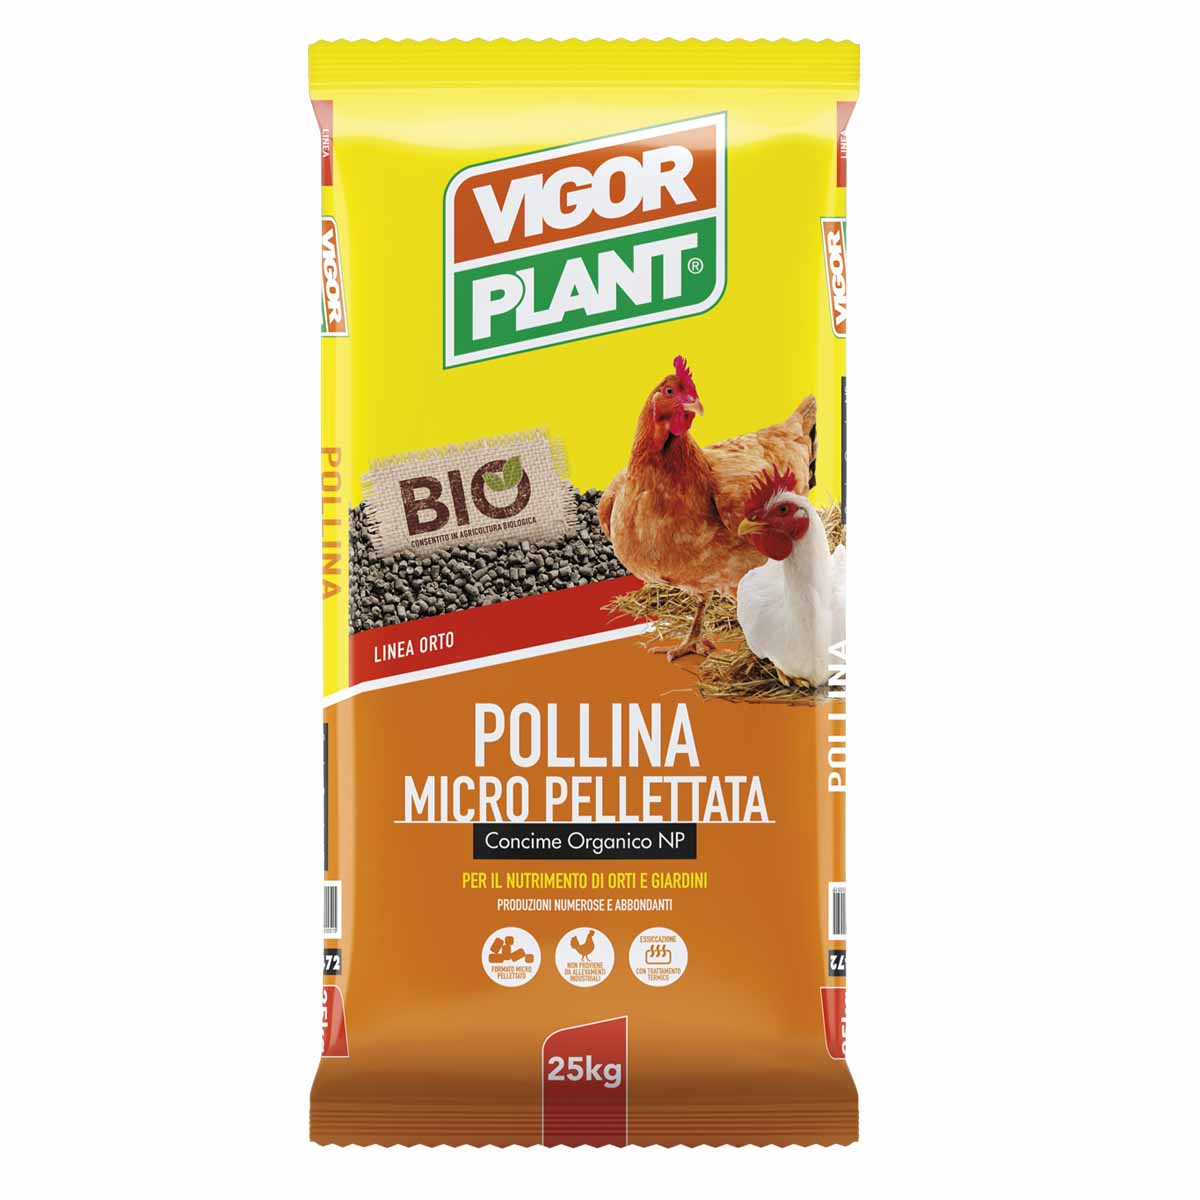 Vigorplant Pollina Micro Pellettata